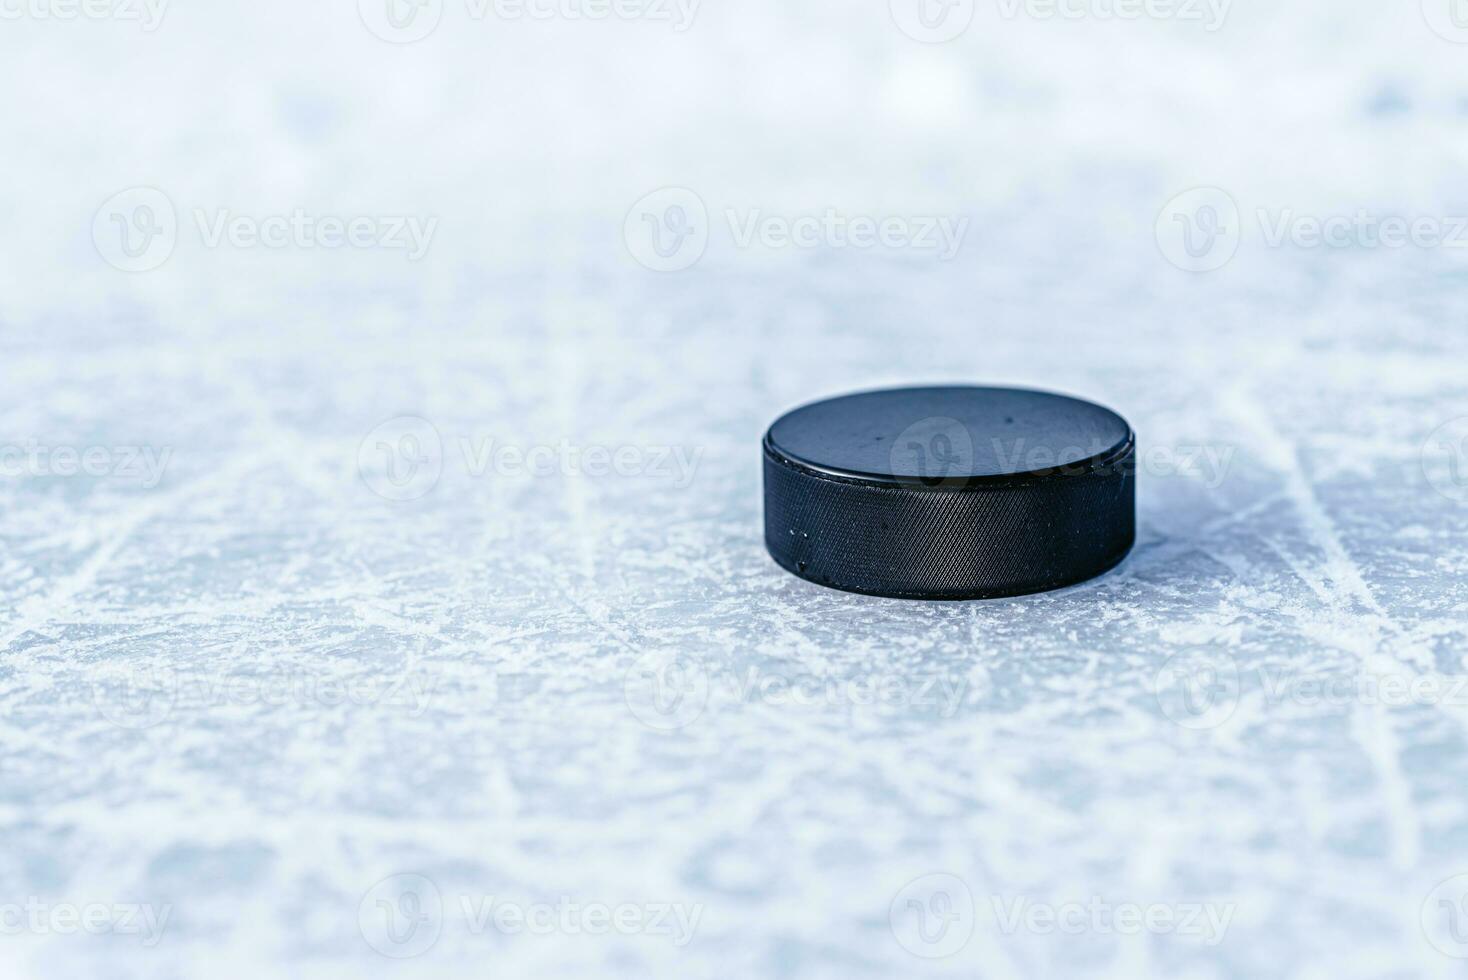 hockey puck lies on the snow close-up photo